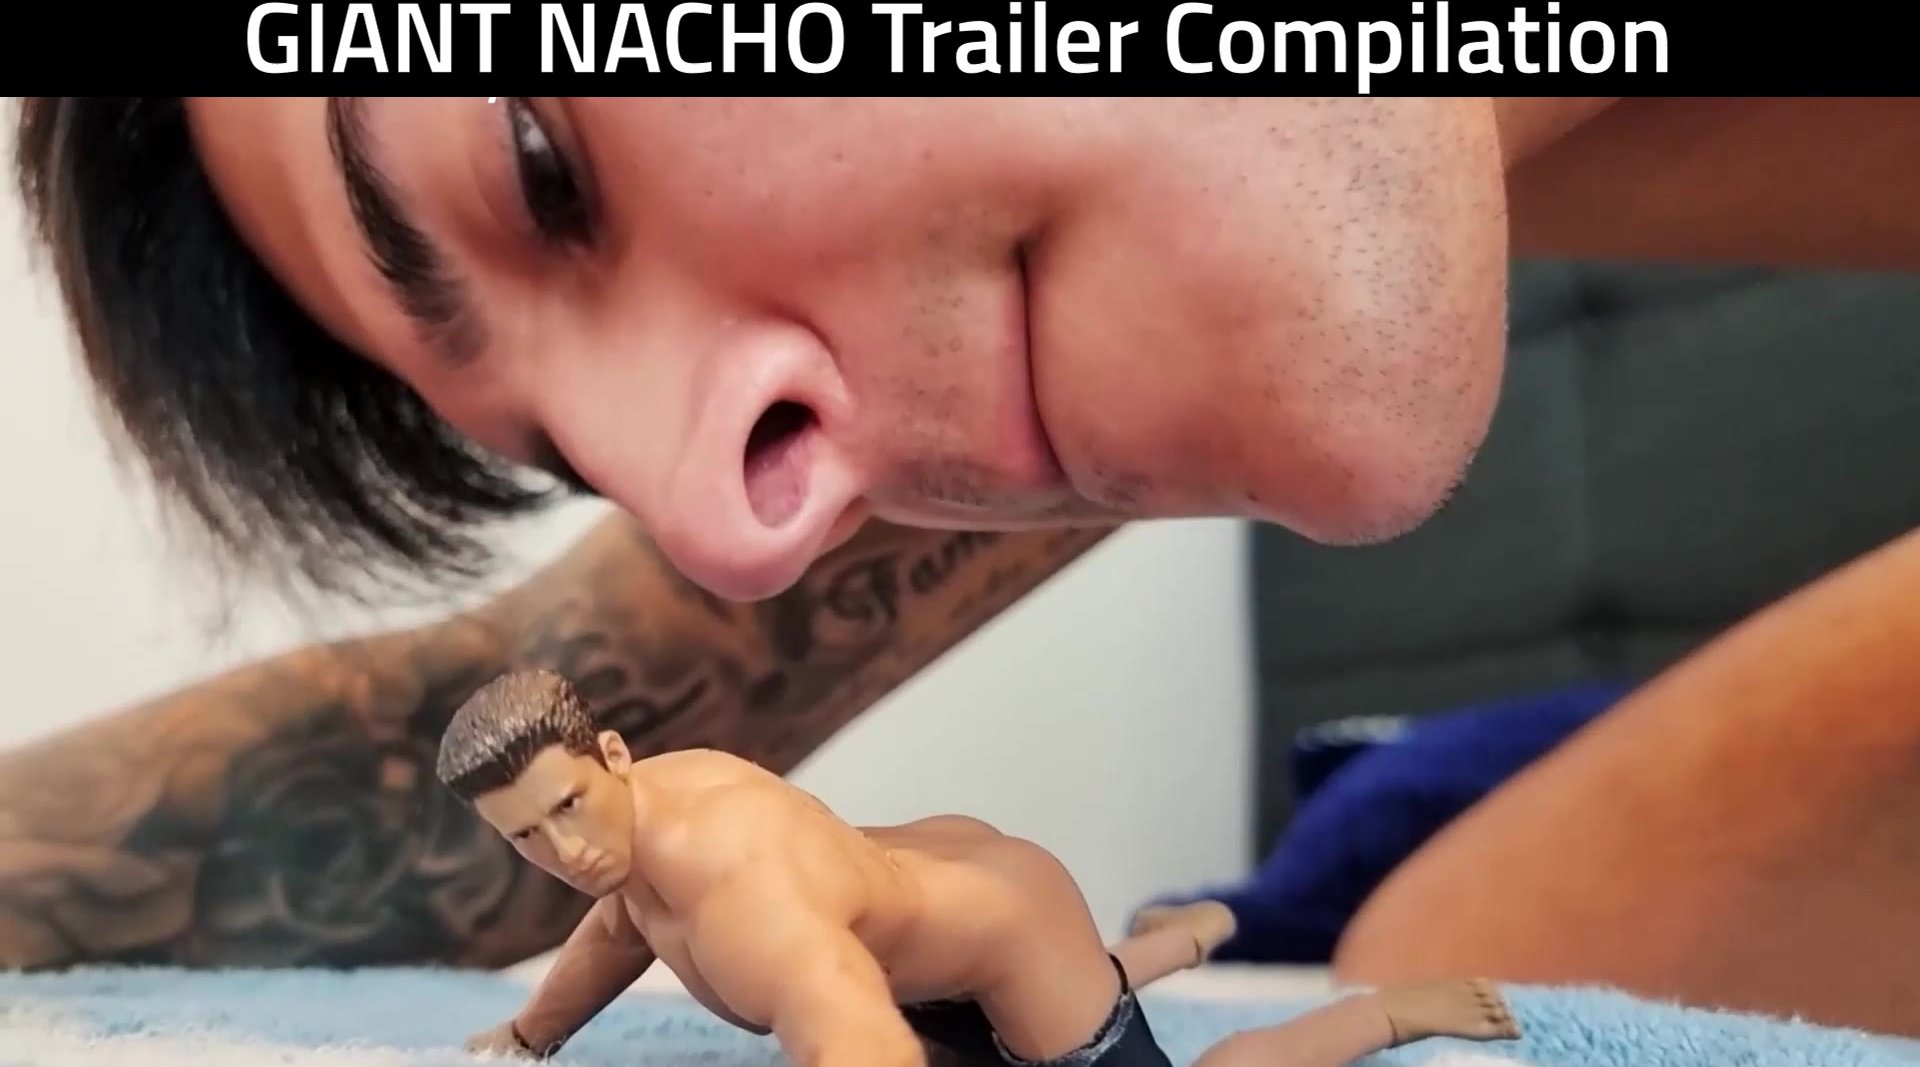 GIANT NACHO Trailer Compilation